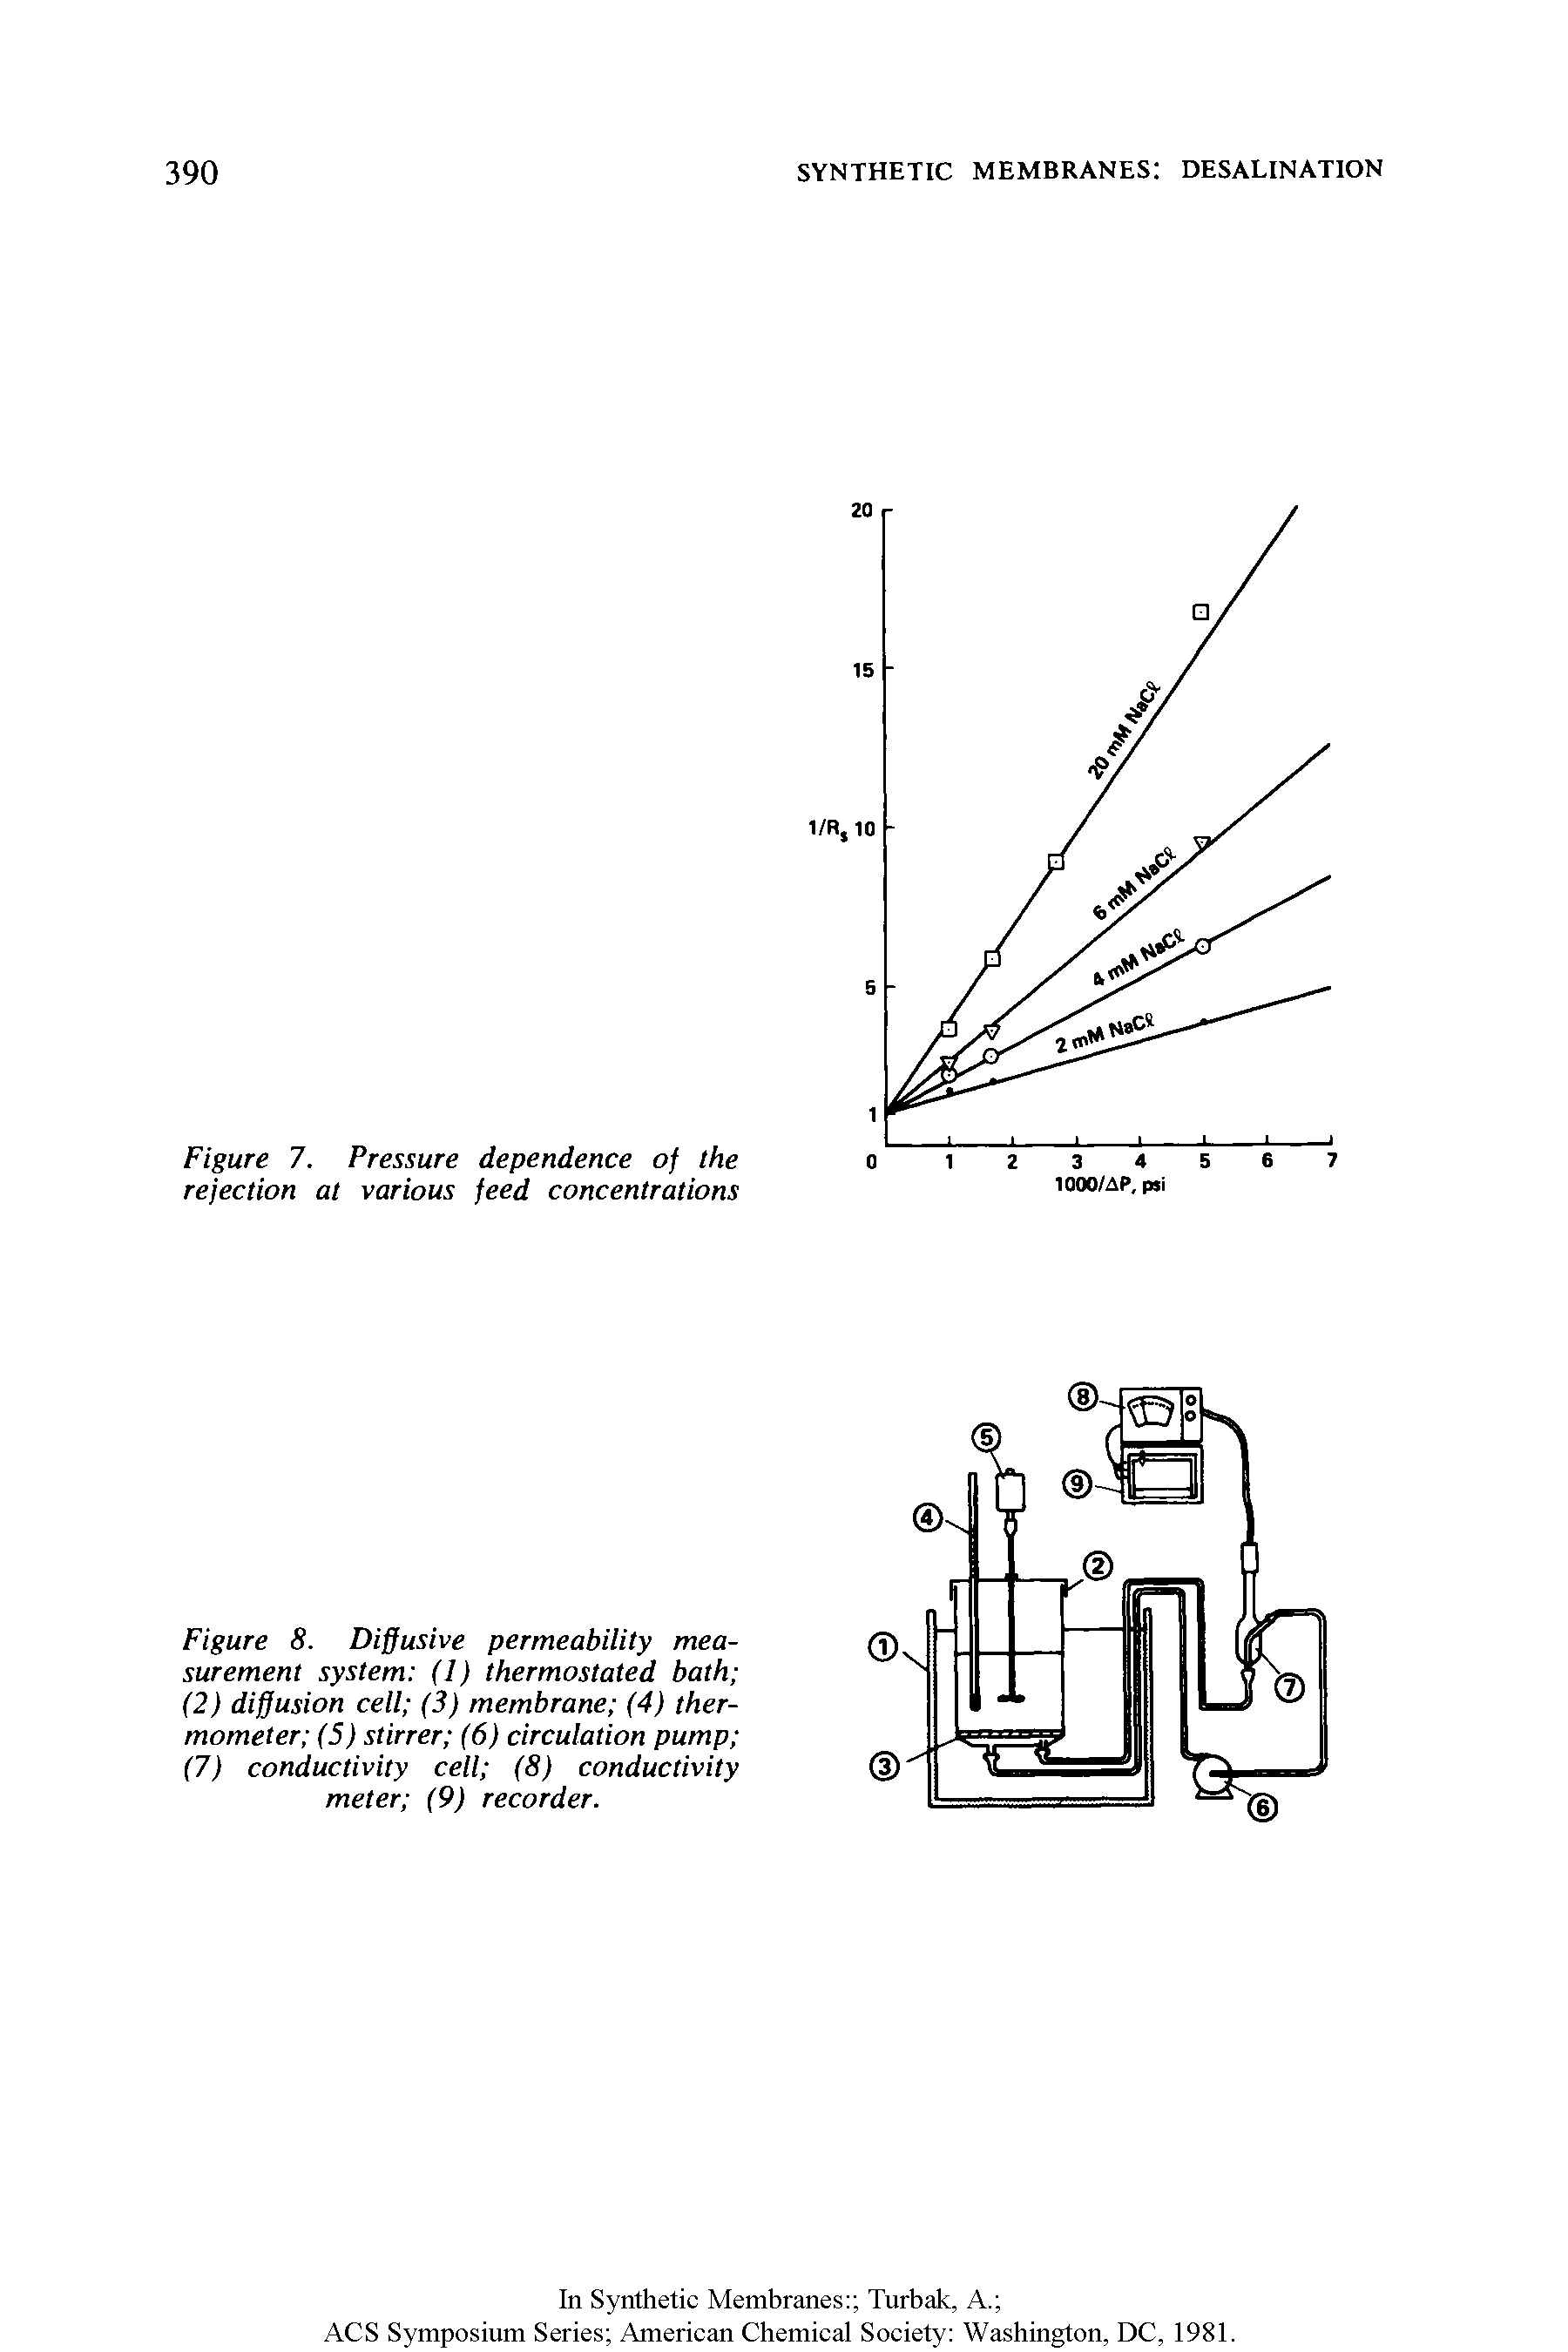 Figure 8. Diffusive permeability measurement system (1) thermostated bath (2) diffusion cell (3) membrane (4) thermometer (5) stirrer (6) circulation pump (7) conductivity cell (8) conductivity meter (9) recorder.